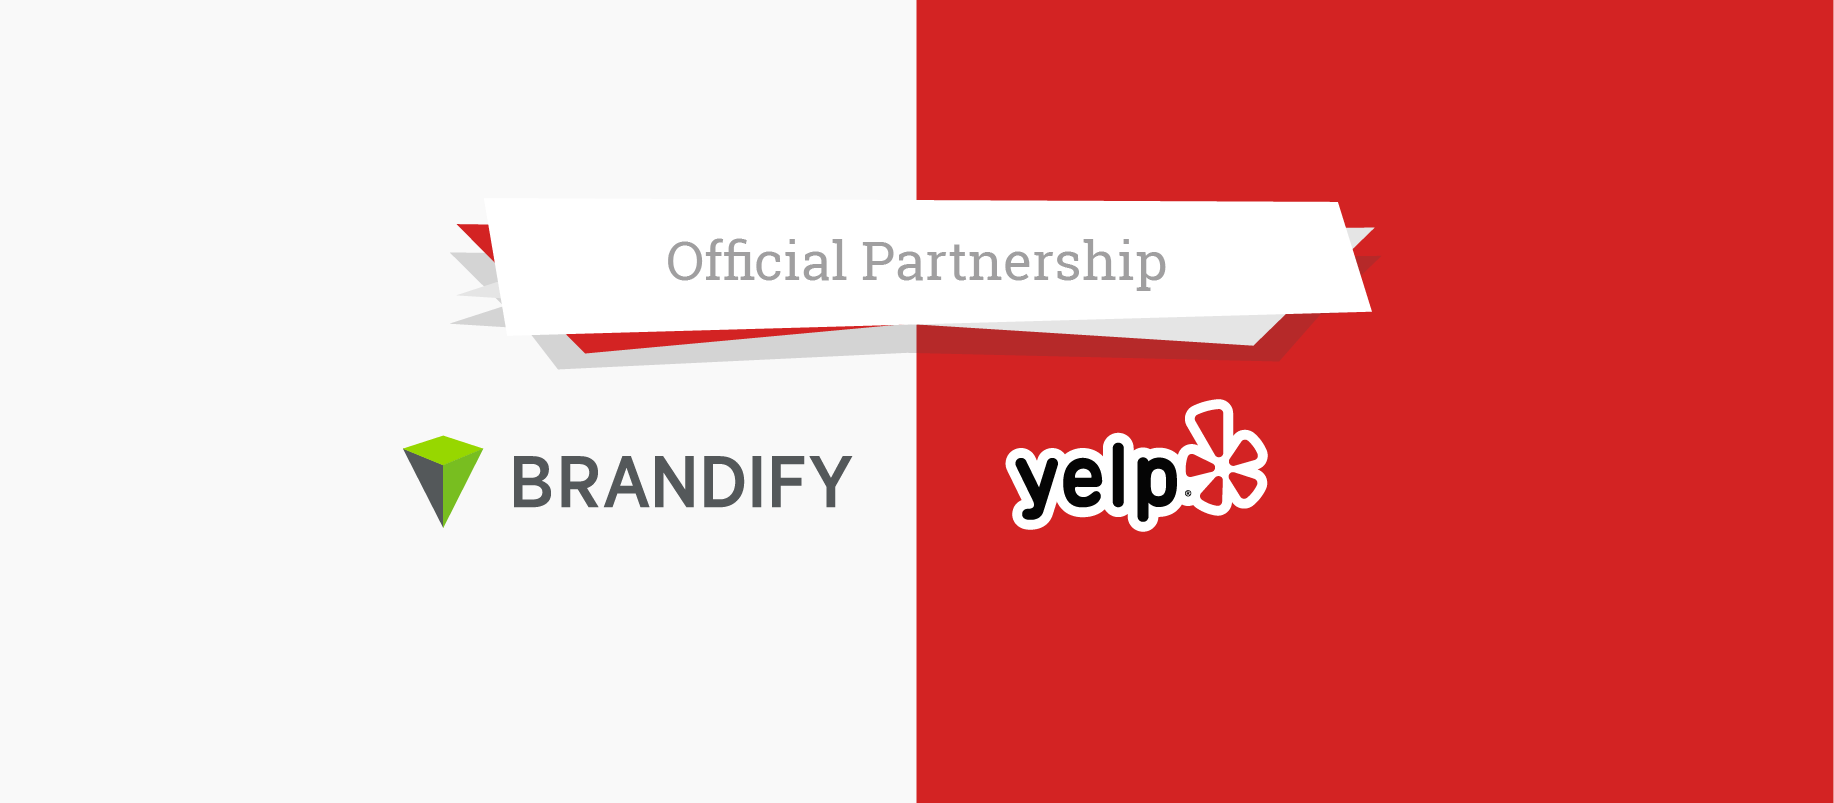 Yelp-partnership-emailgraphic-1.png